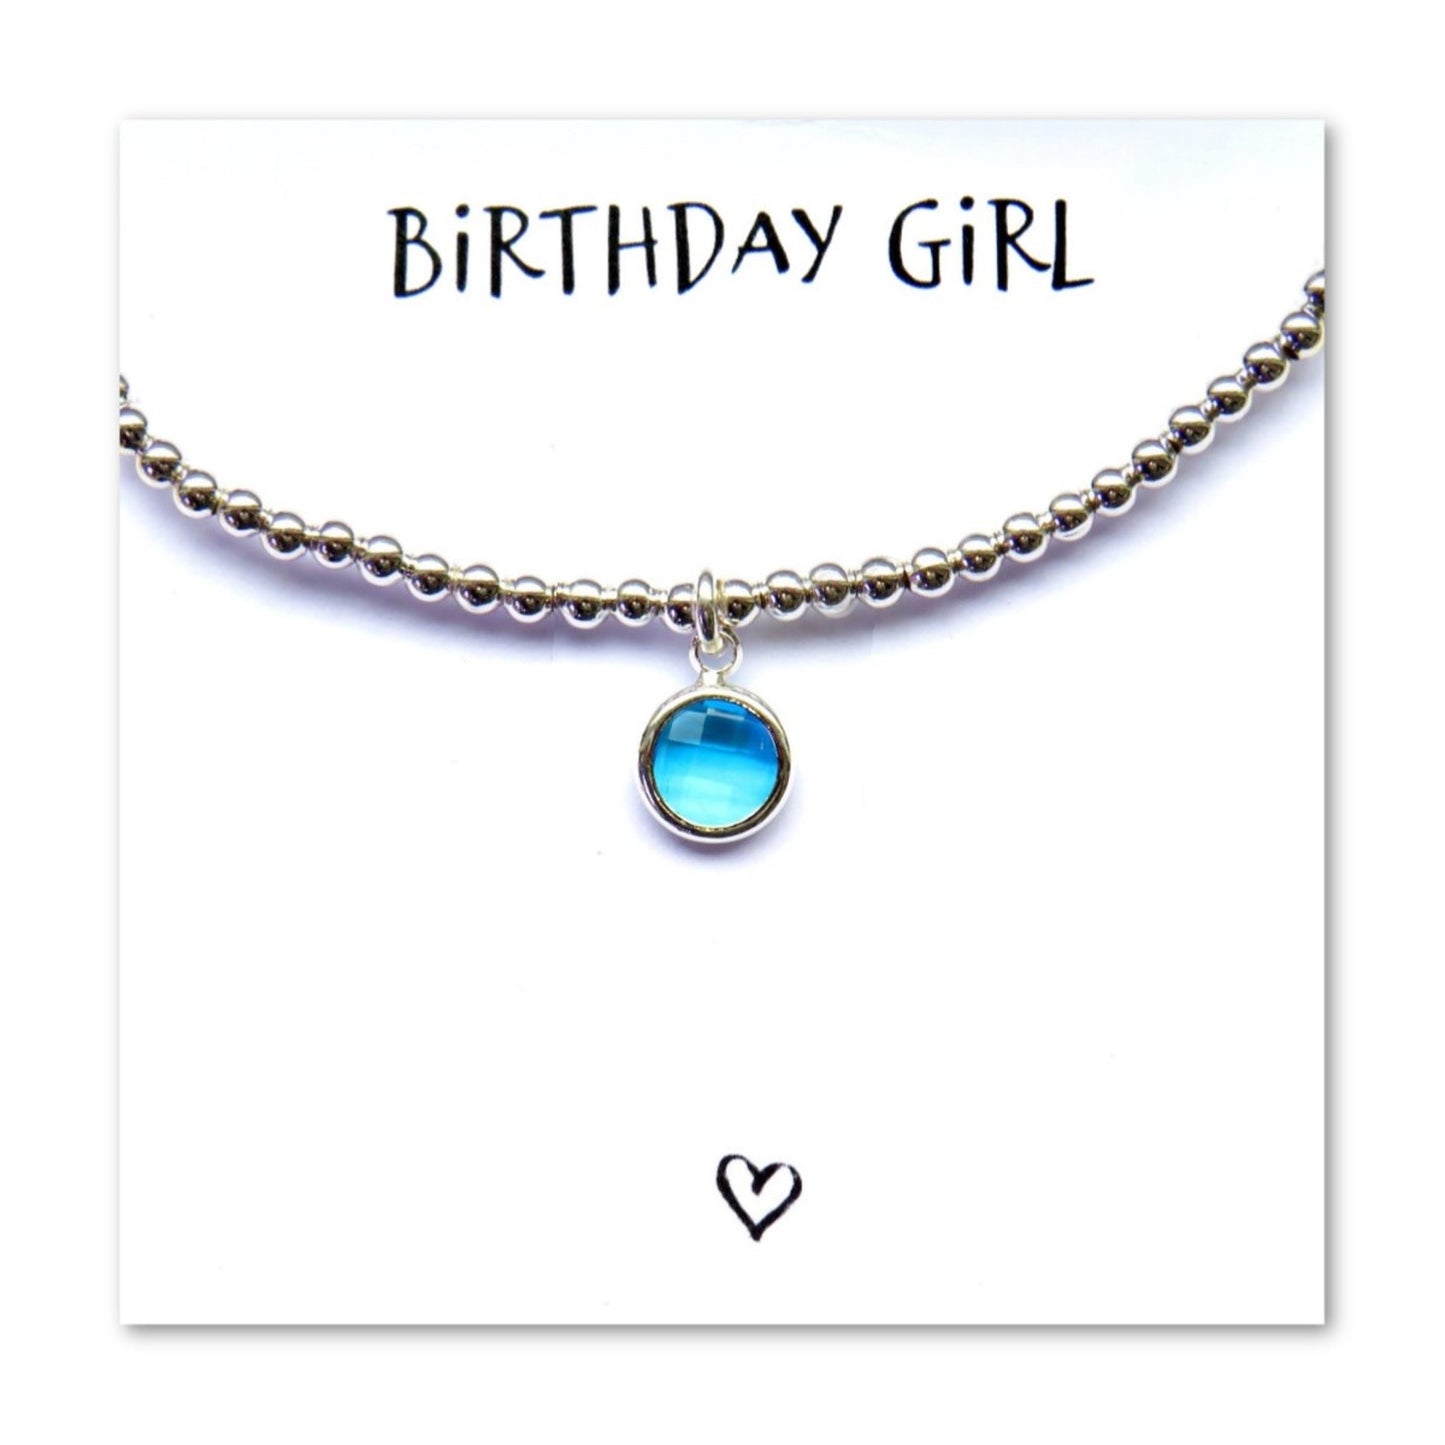 Birthday Girl Charm Bracelet & Card